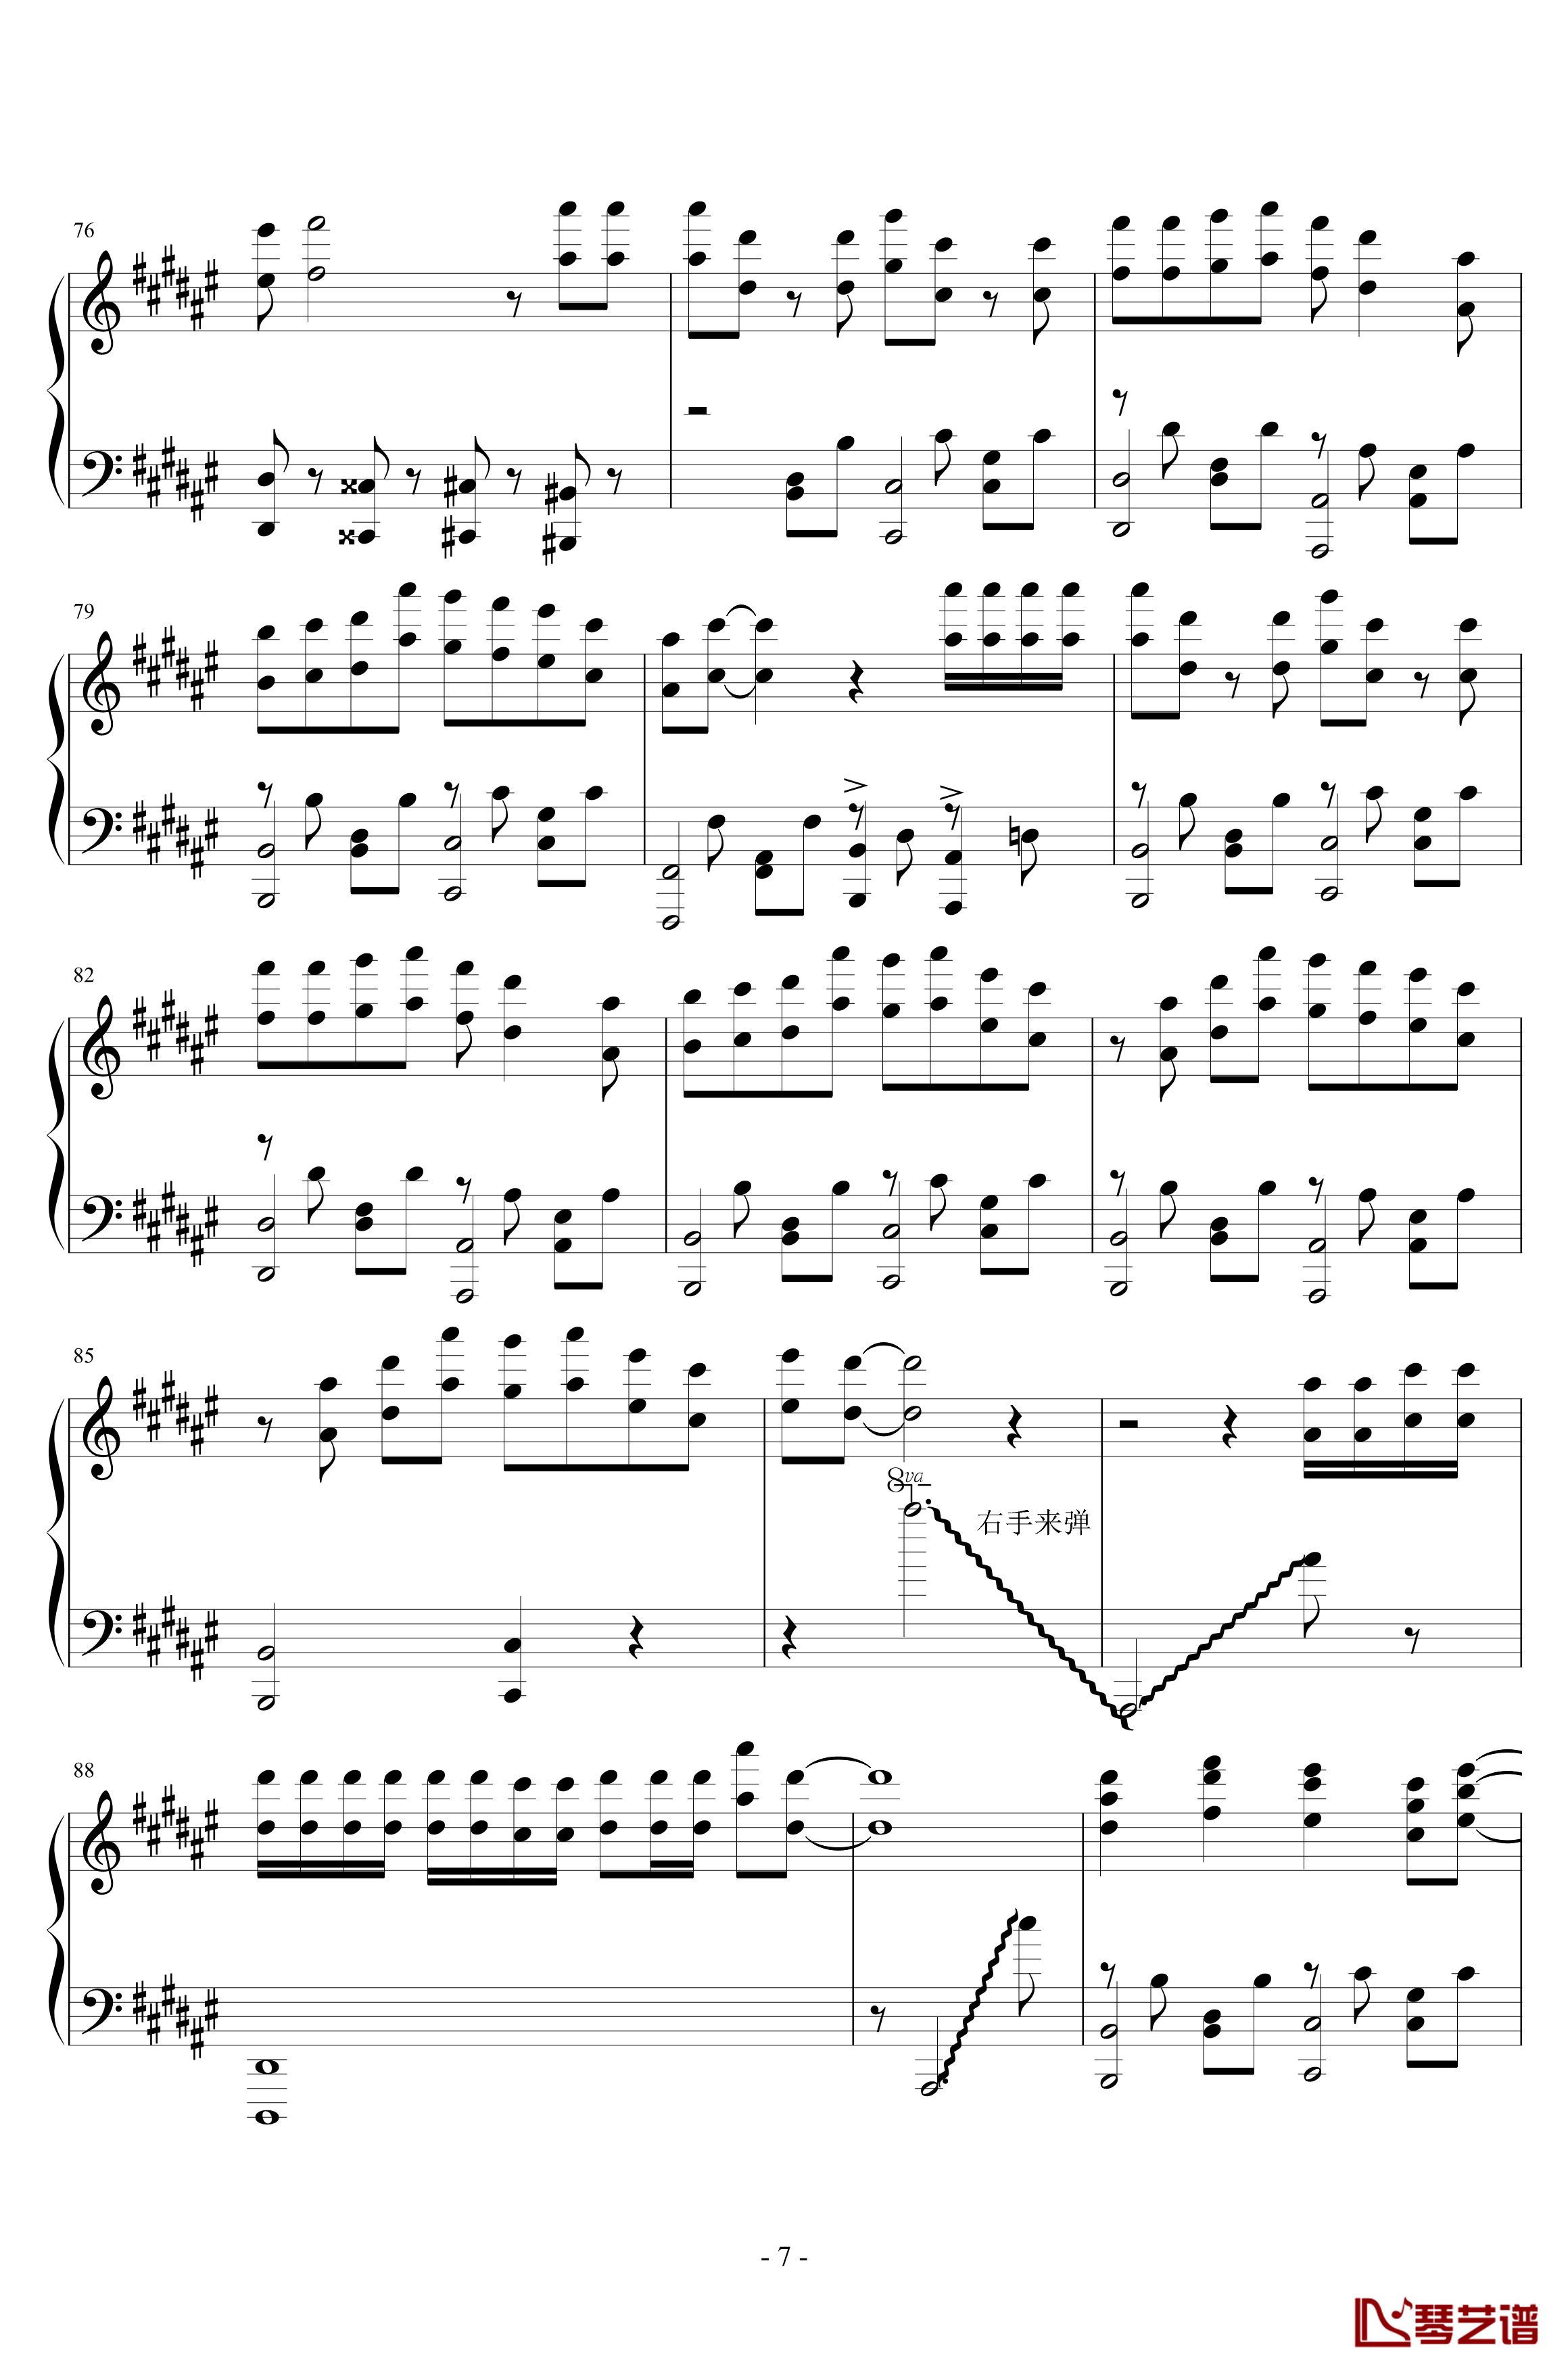 SNOBBISM钢琴谱 -Neru7